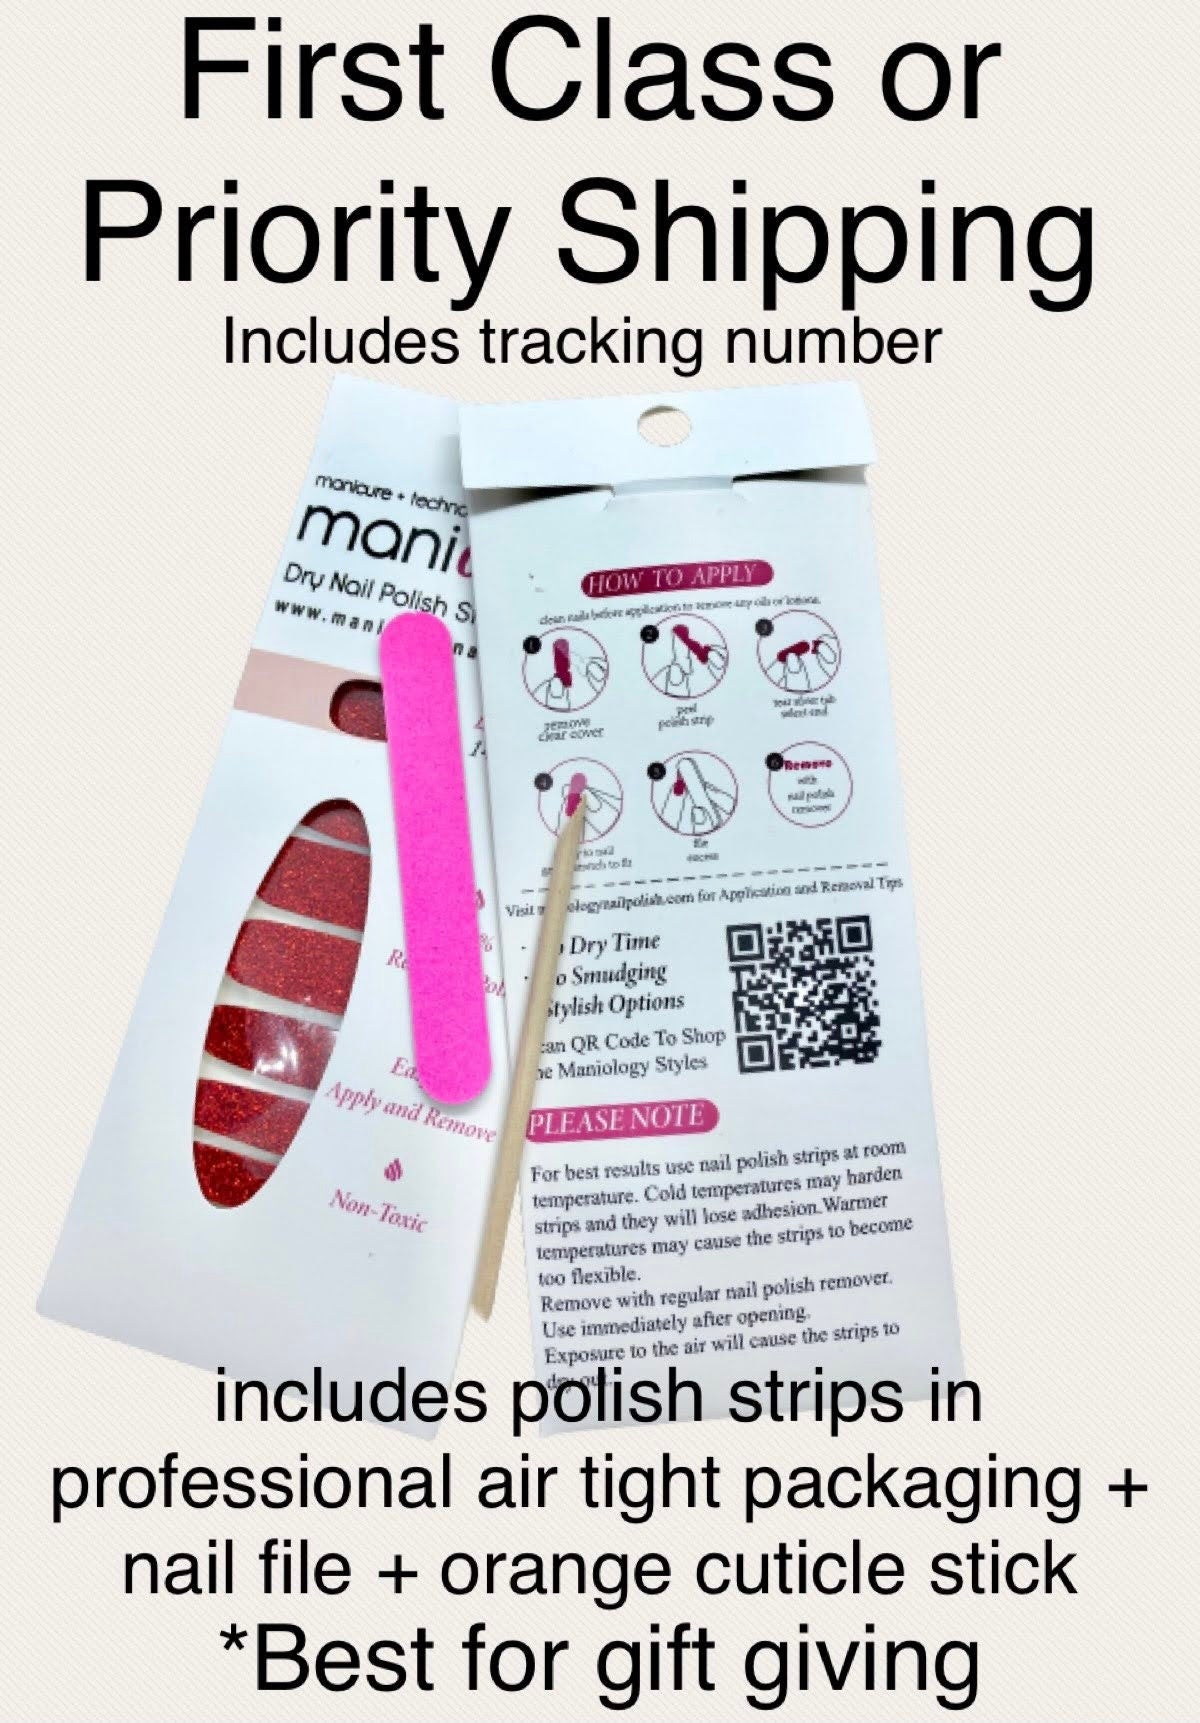 Bright Coral Pink Solid Finish, ManiCURE  Real Nail Polish Strips, Dry Nail Polish, Nail Wraps, Stickers, Long Lasting, Non Toxic - manicurenailpolish